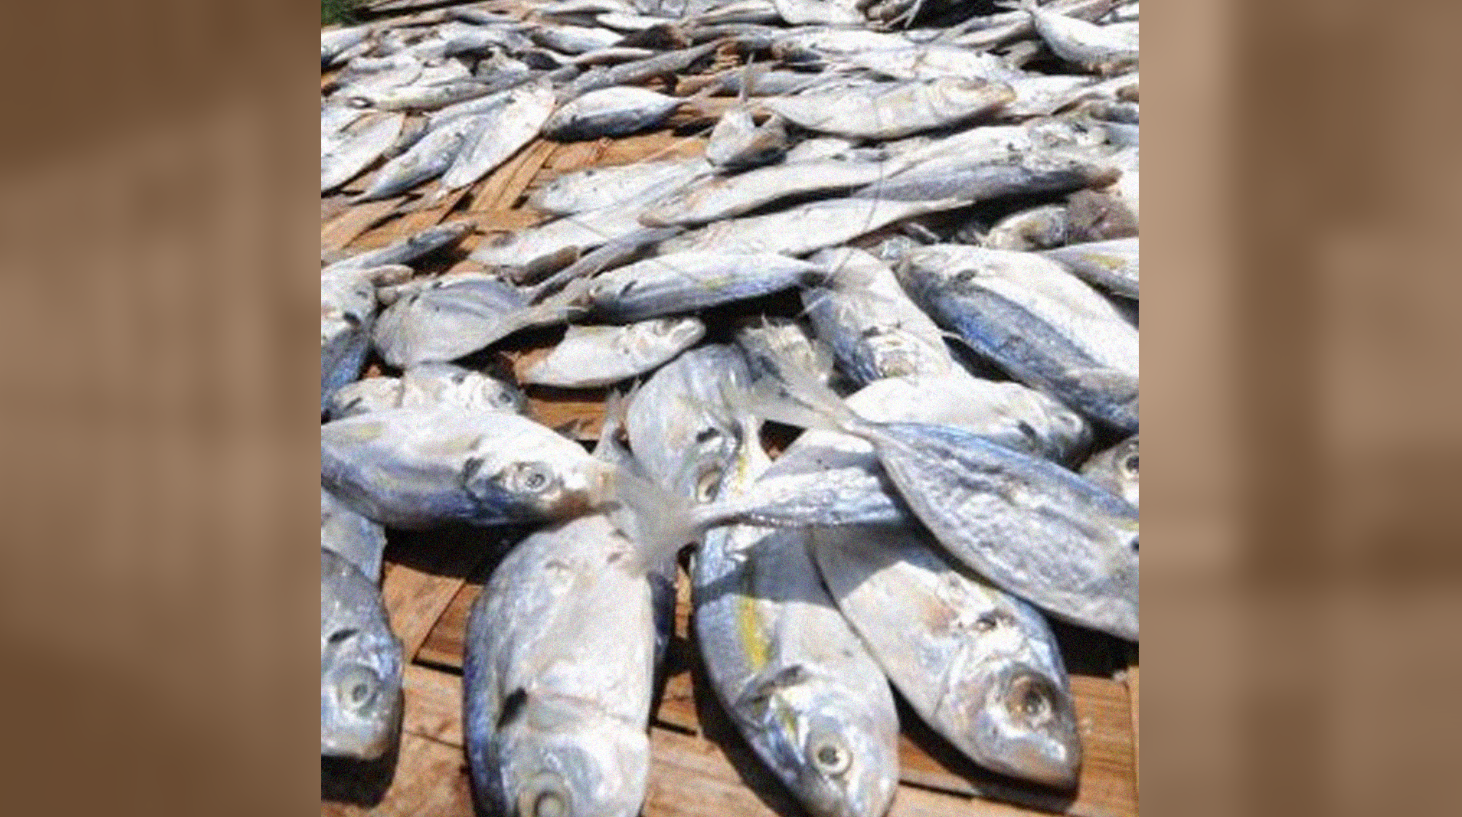 Pekerja menjemur ikan asin di industri pengolahan ikan asin Pelabuhan Jongor, Tegal, Jawa Tengah, Selasa (12/5). Ikan asin jenis selar yang dikirim ke Jakarta dan Bandung tersebut dijual Rp 13 ribu per kilo. (Foto: Antara)